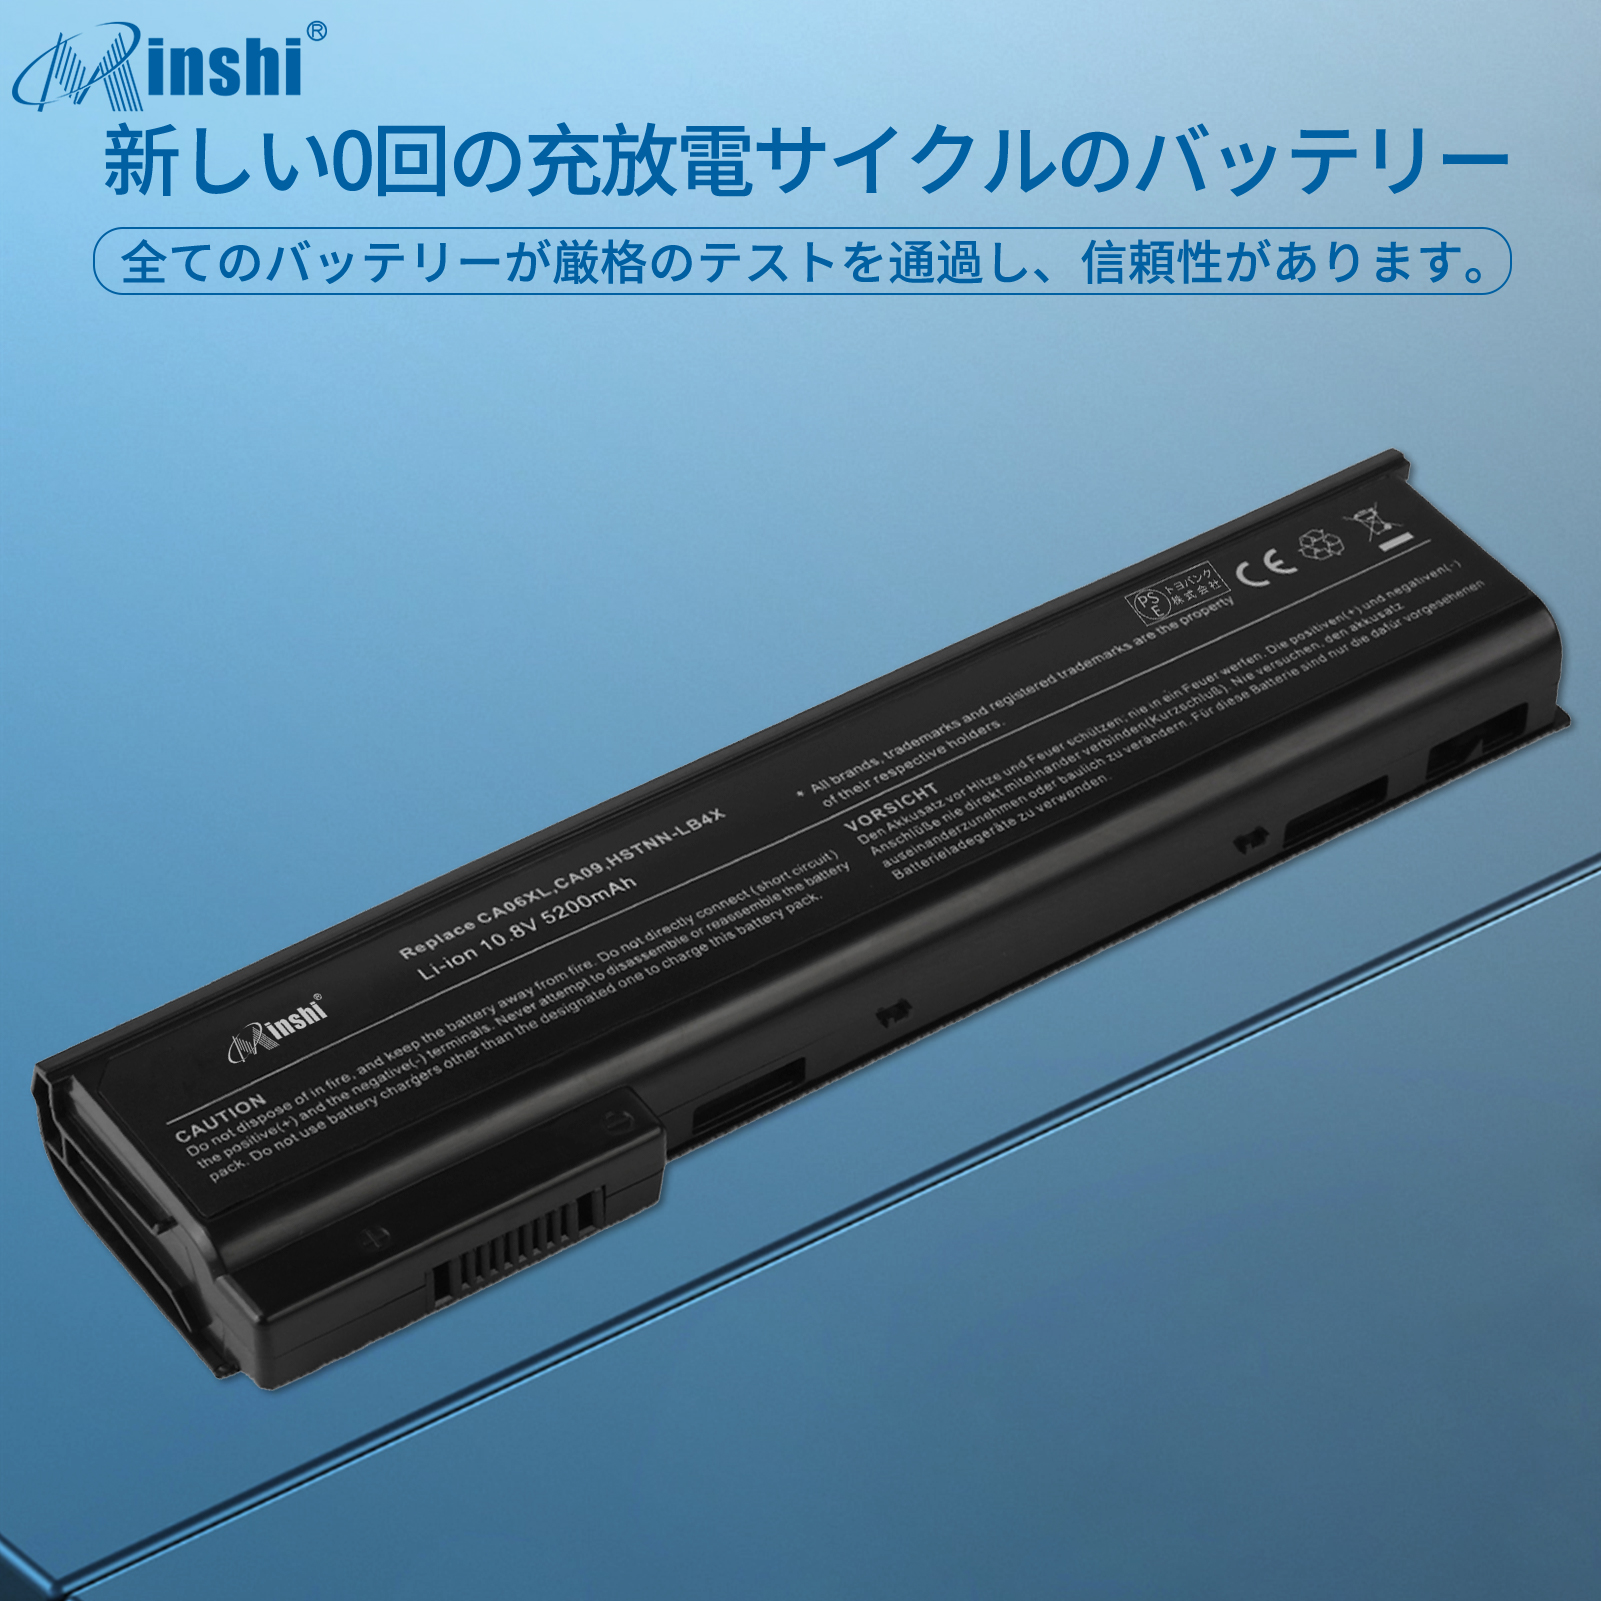  minshi HP CA06  5200mAh  高品質互換バッテリーWHB